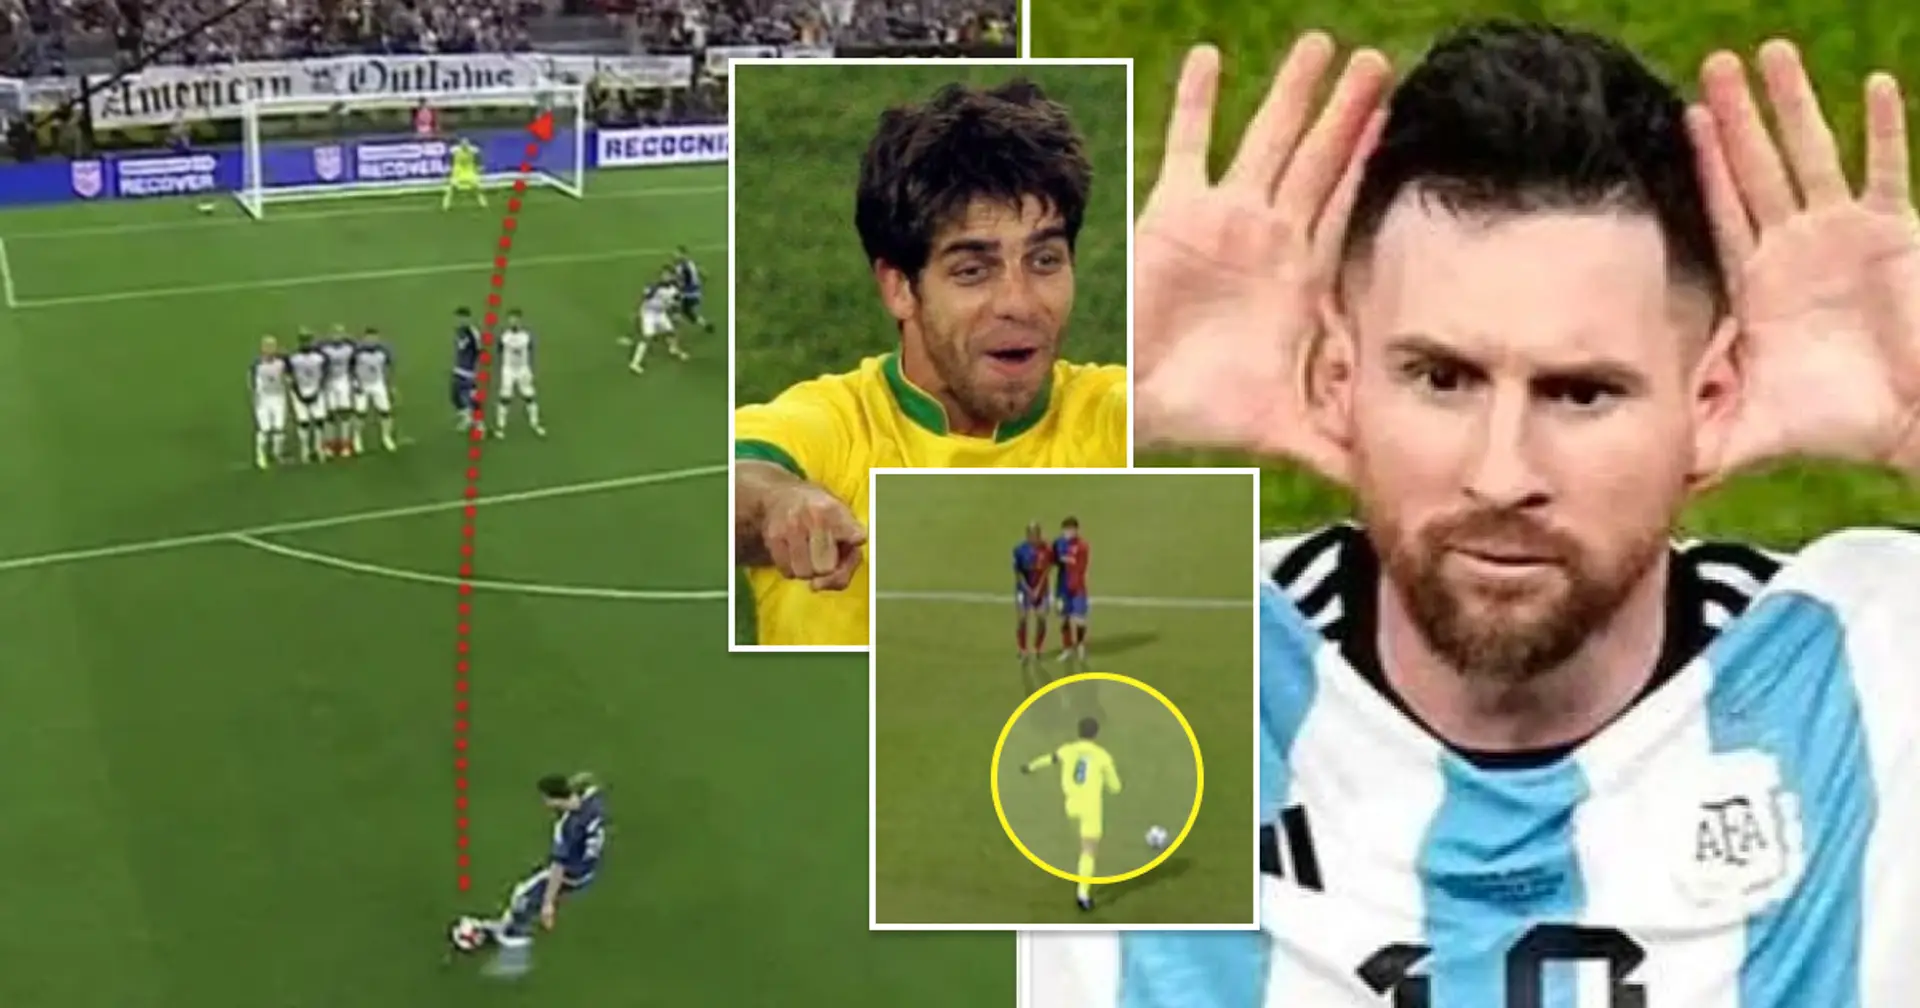 À quel point Messi est-il proche du record de coup franc de Juninho Pernambucano ? Réponse